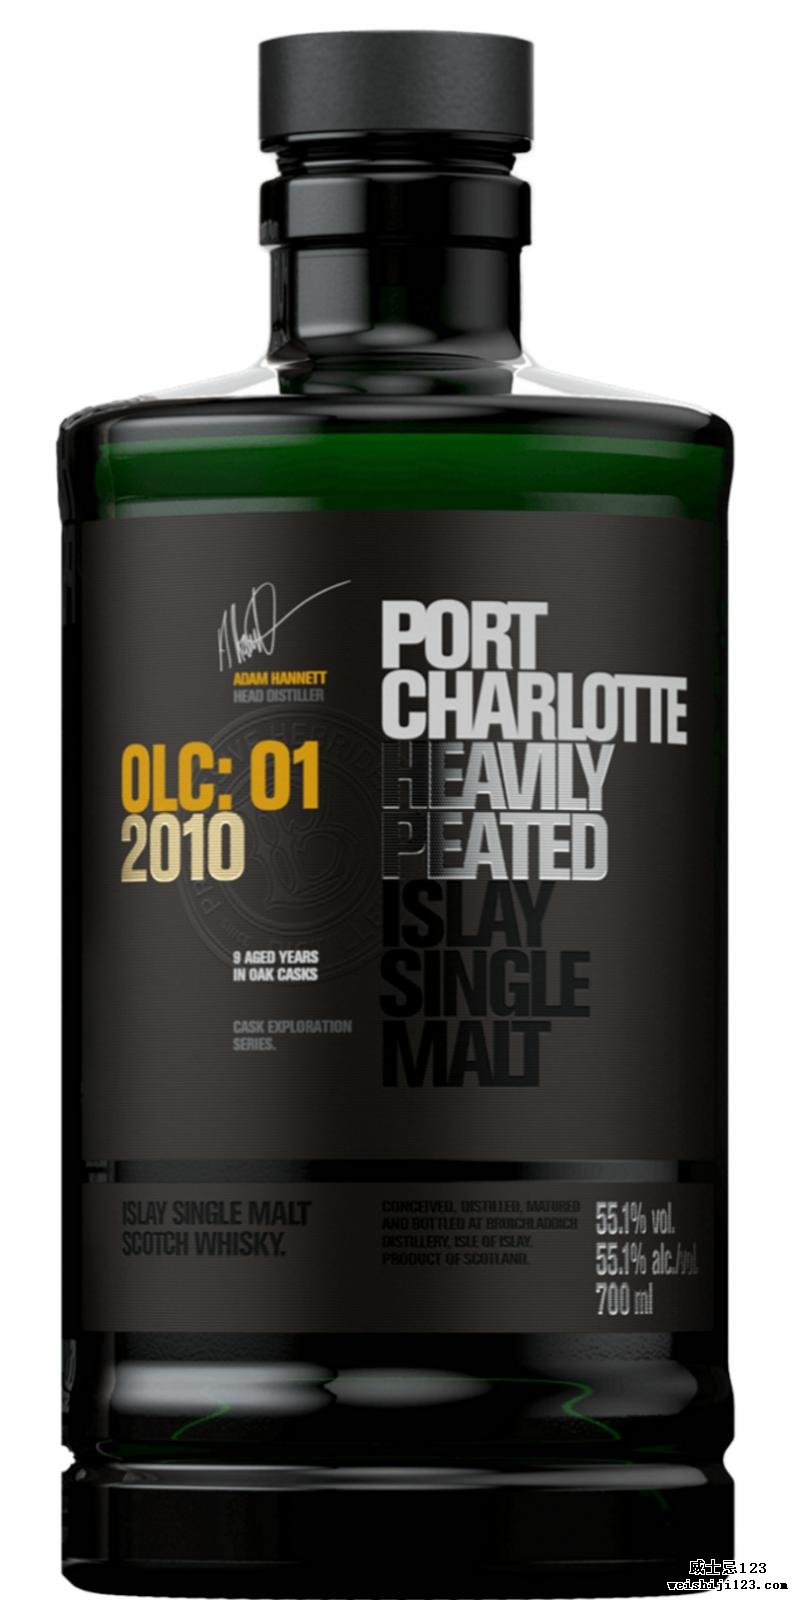 Port Charlotte 2010 - OLC: 01